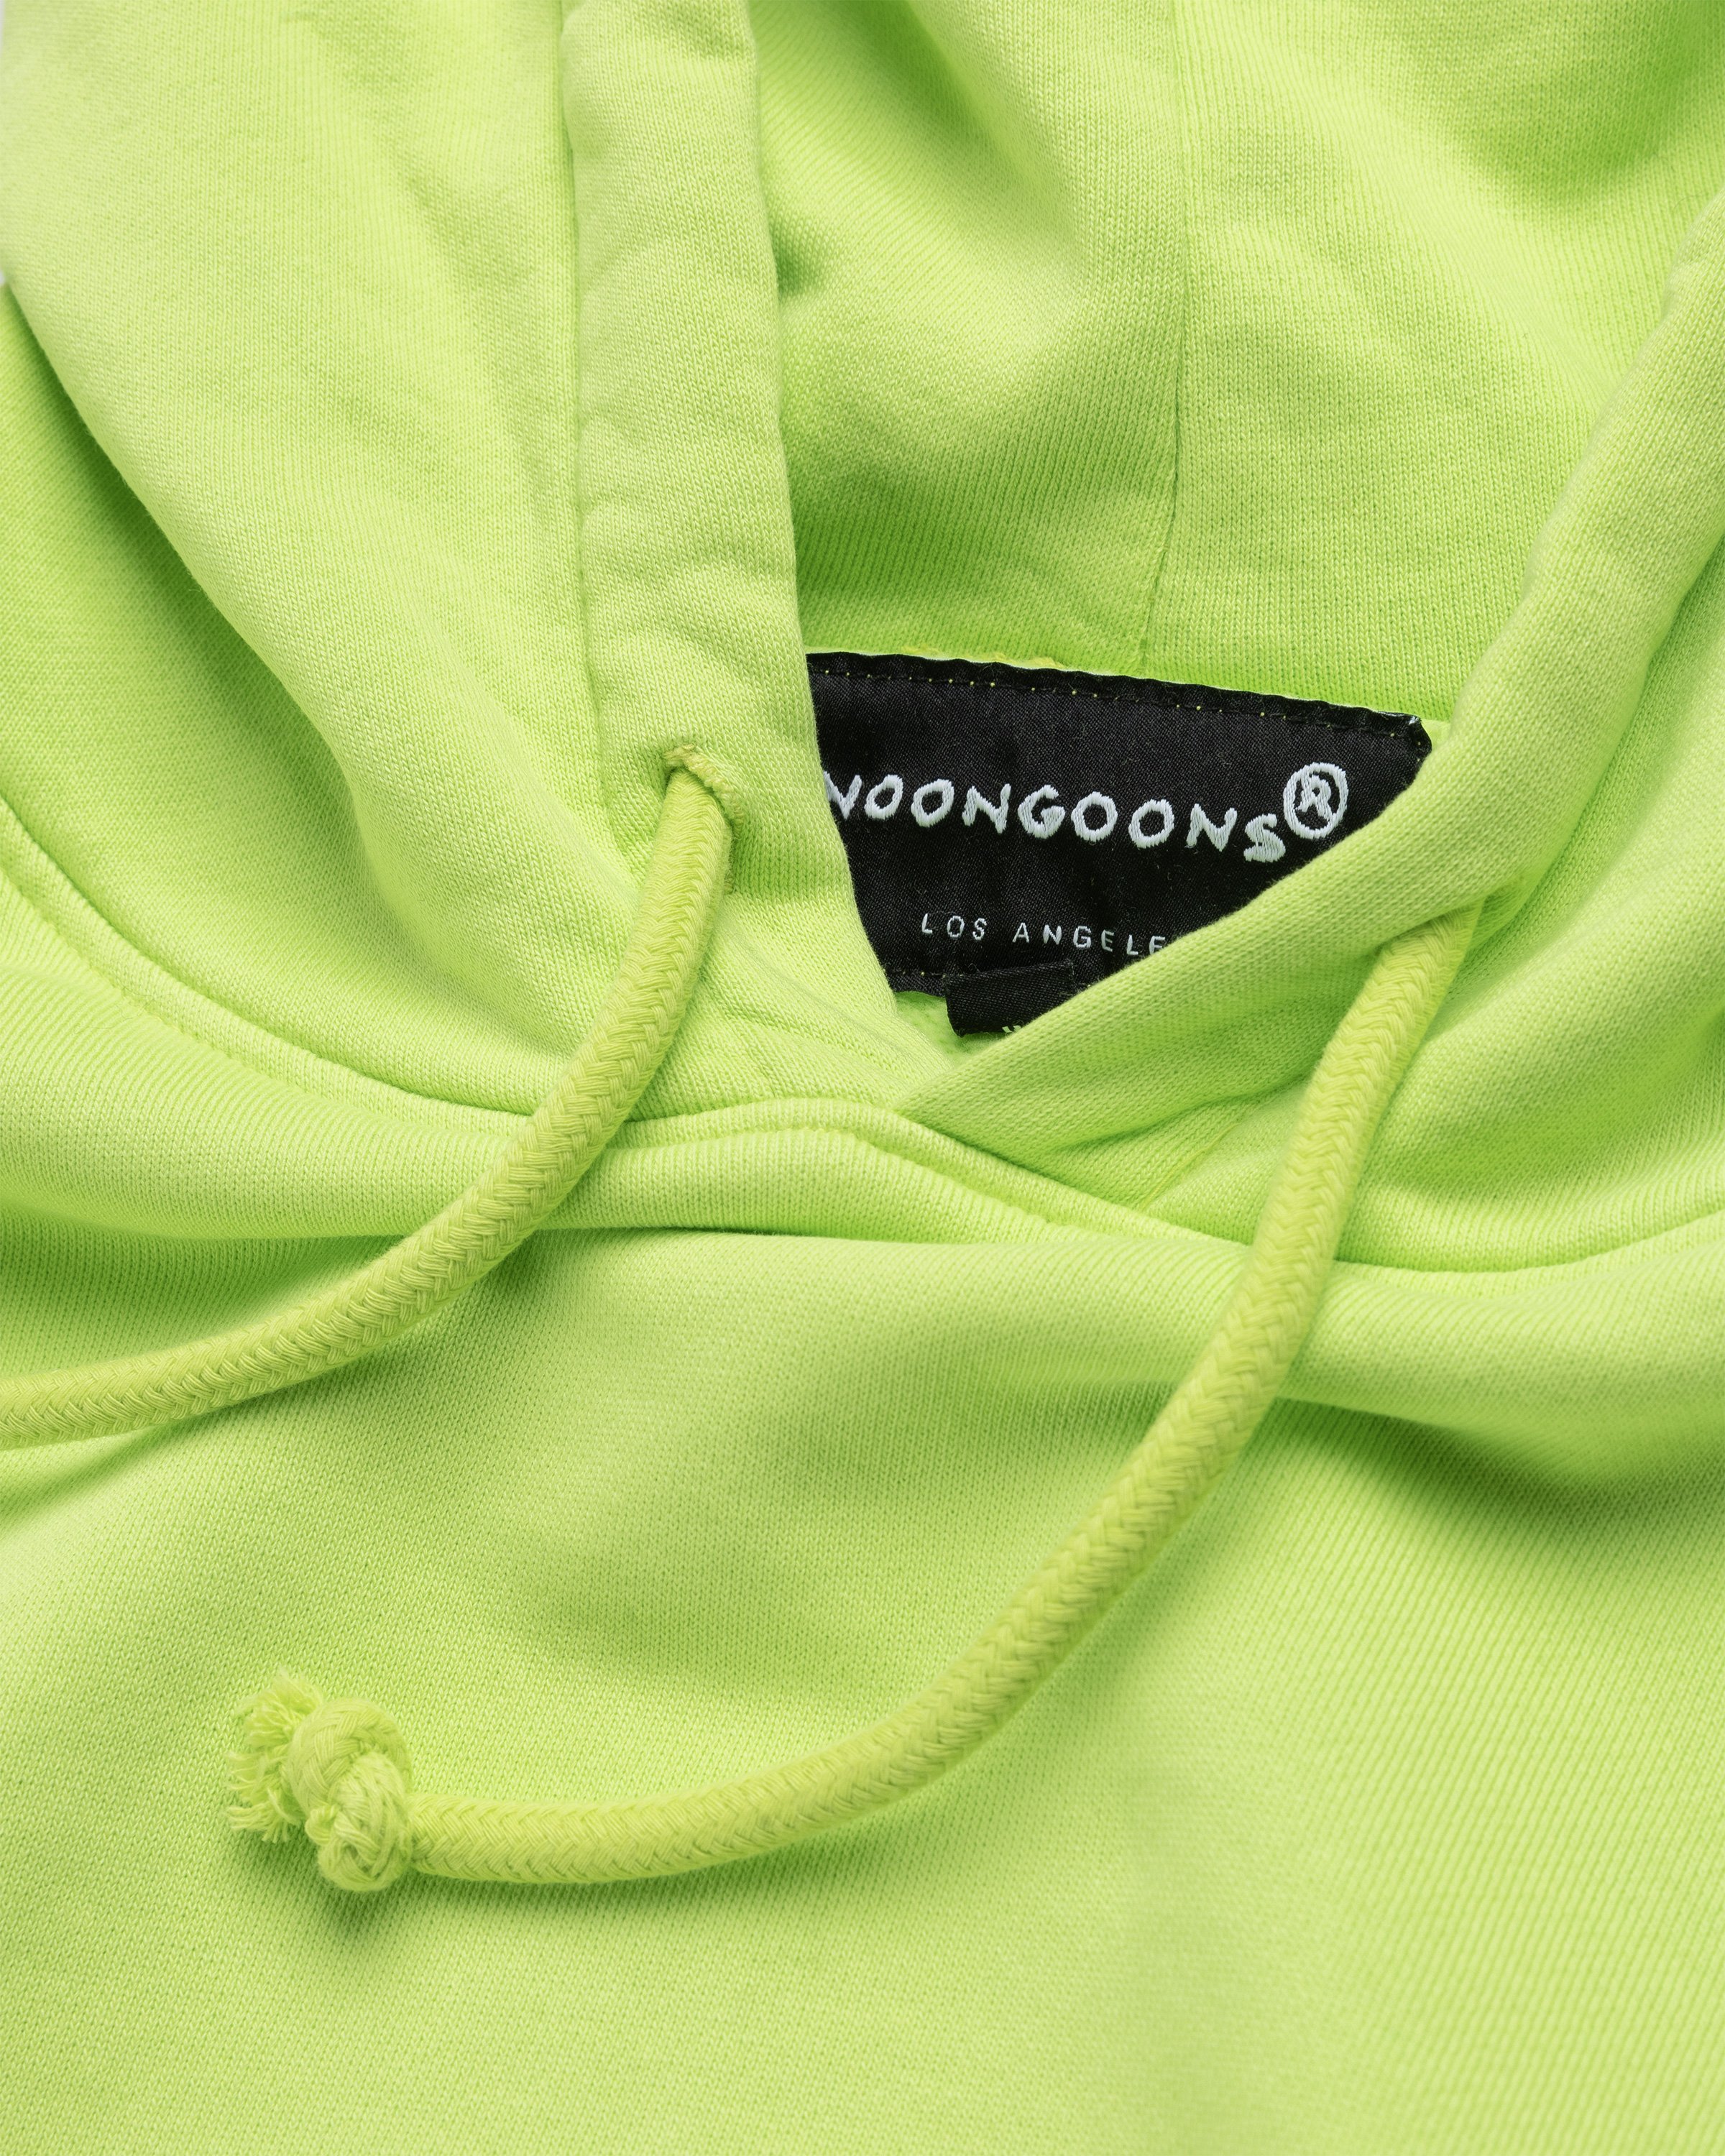 Noon Goons - Kicker Hoodie Green - Clothing - Green - Image 6